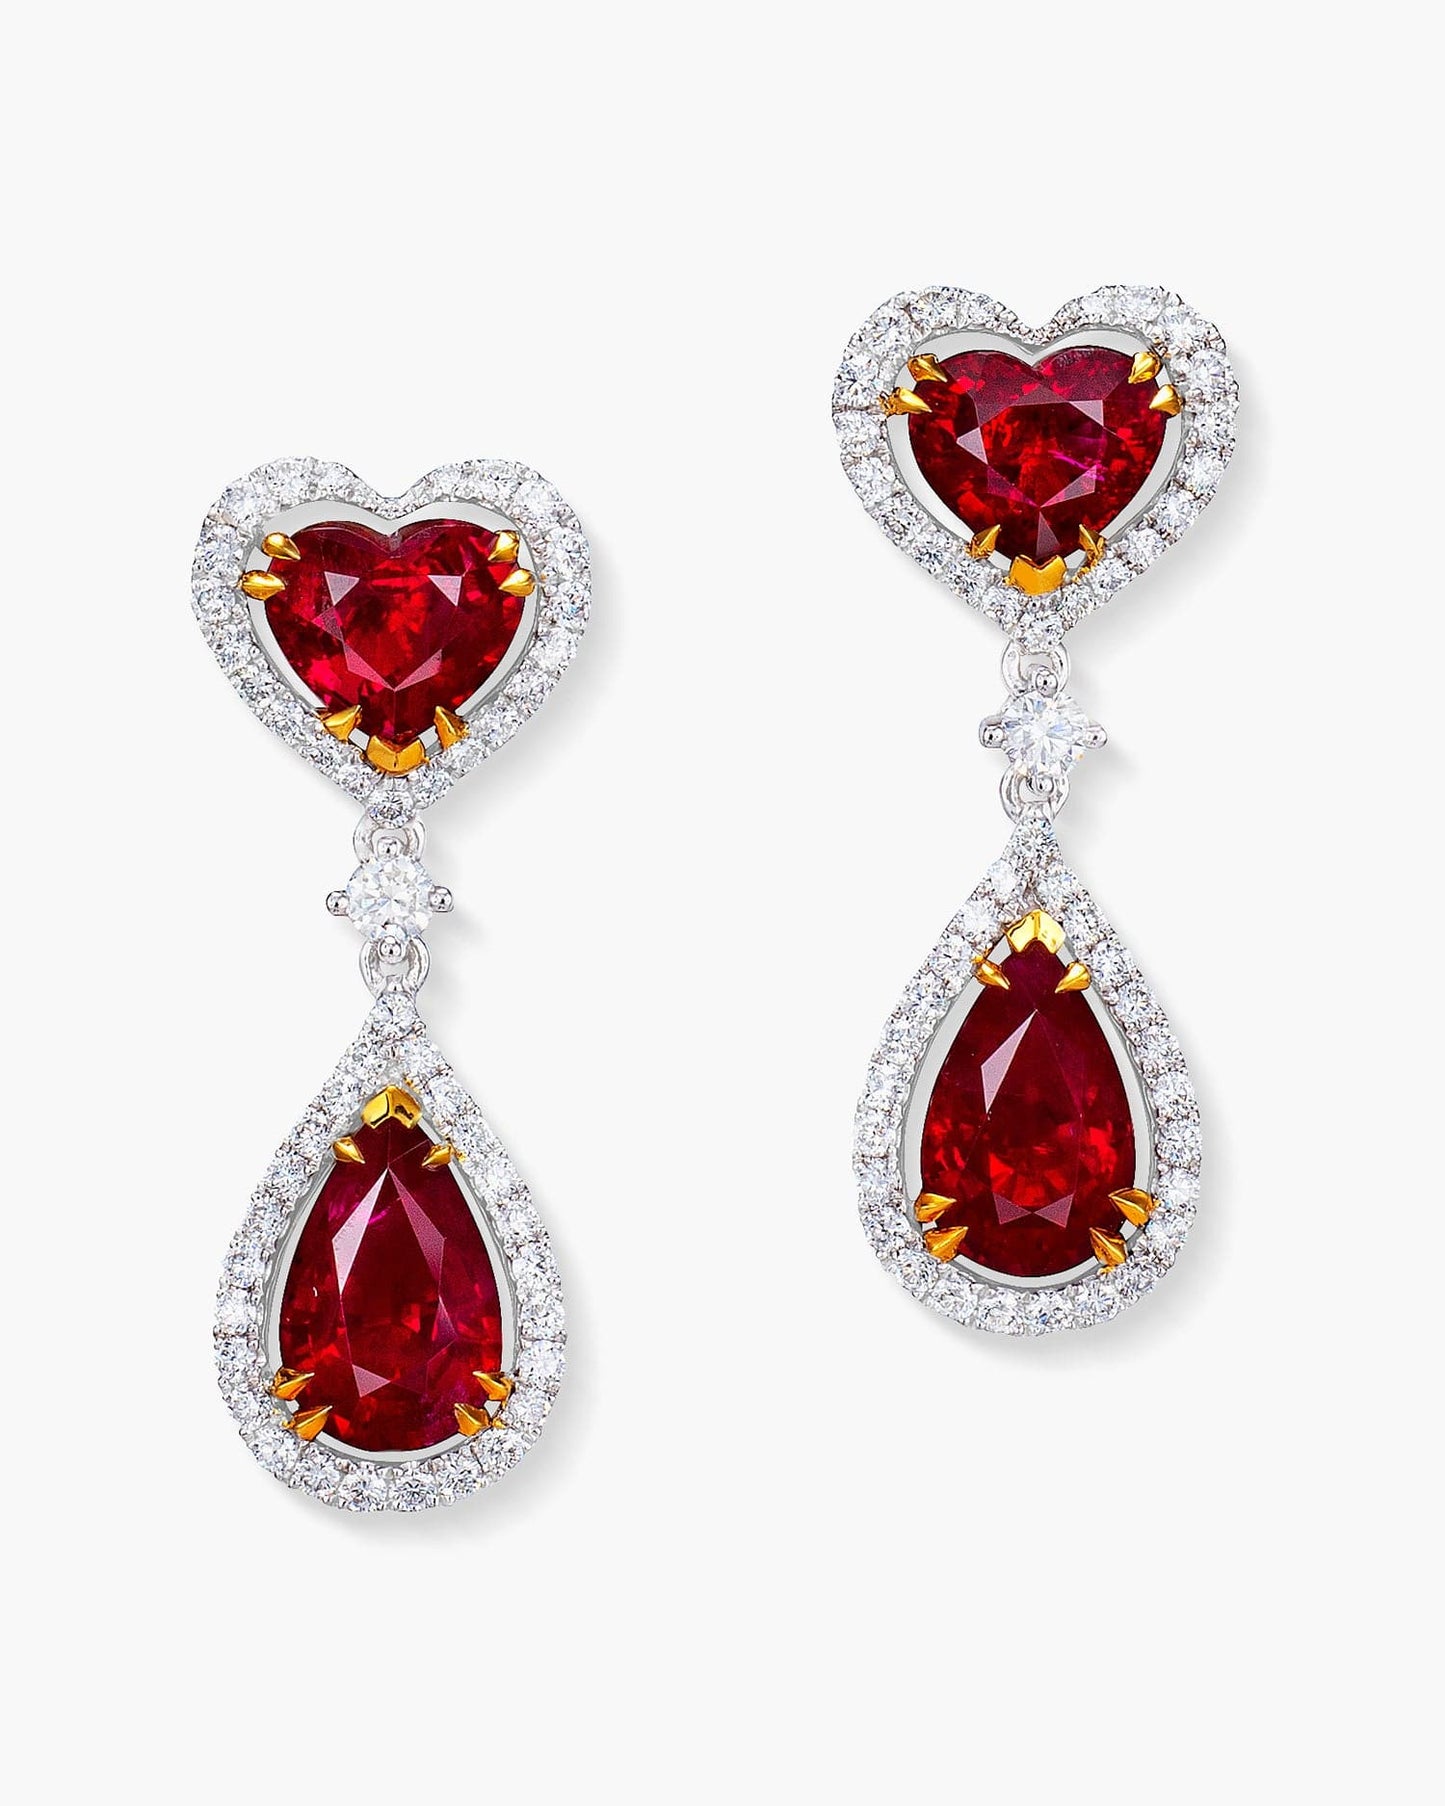 4.55 carat Heart and Pear Shape Burmese Ruby and Diamond Earrings